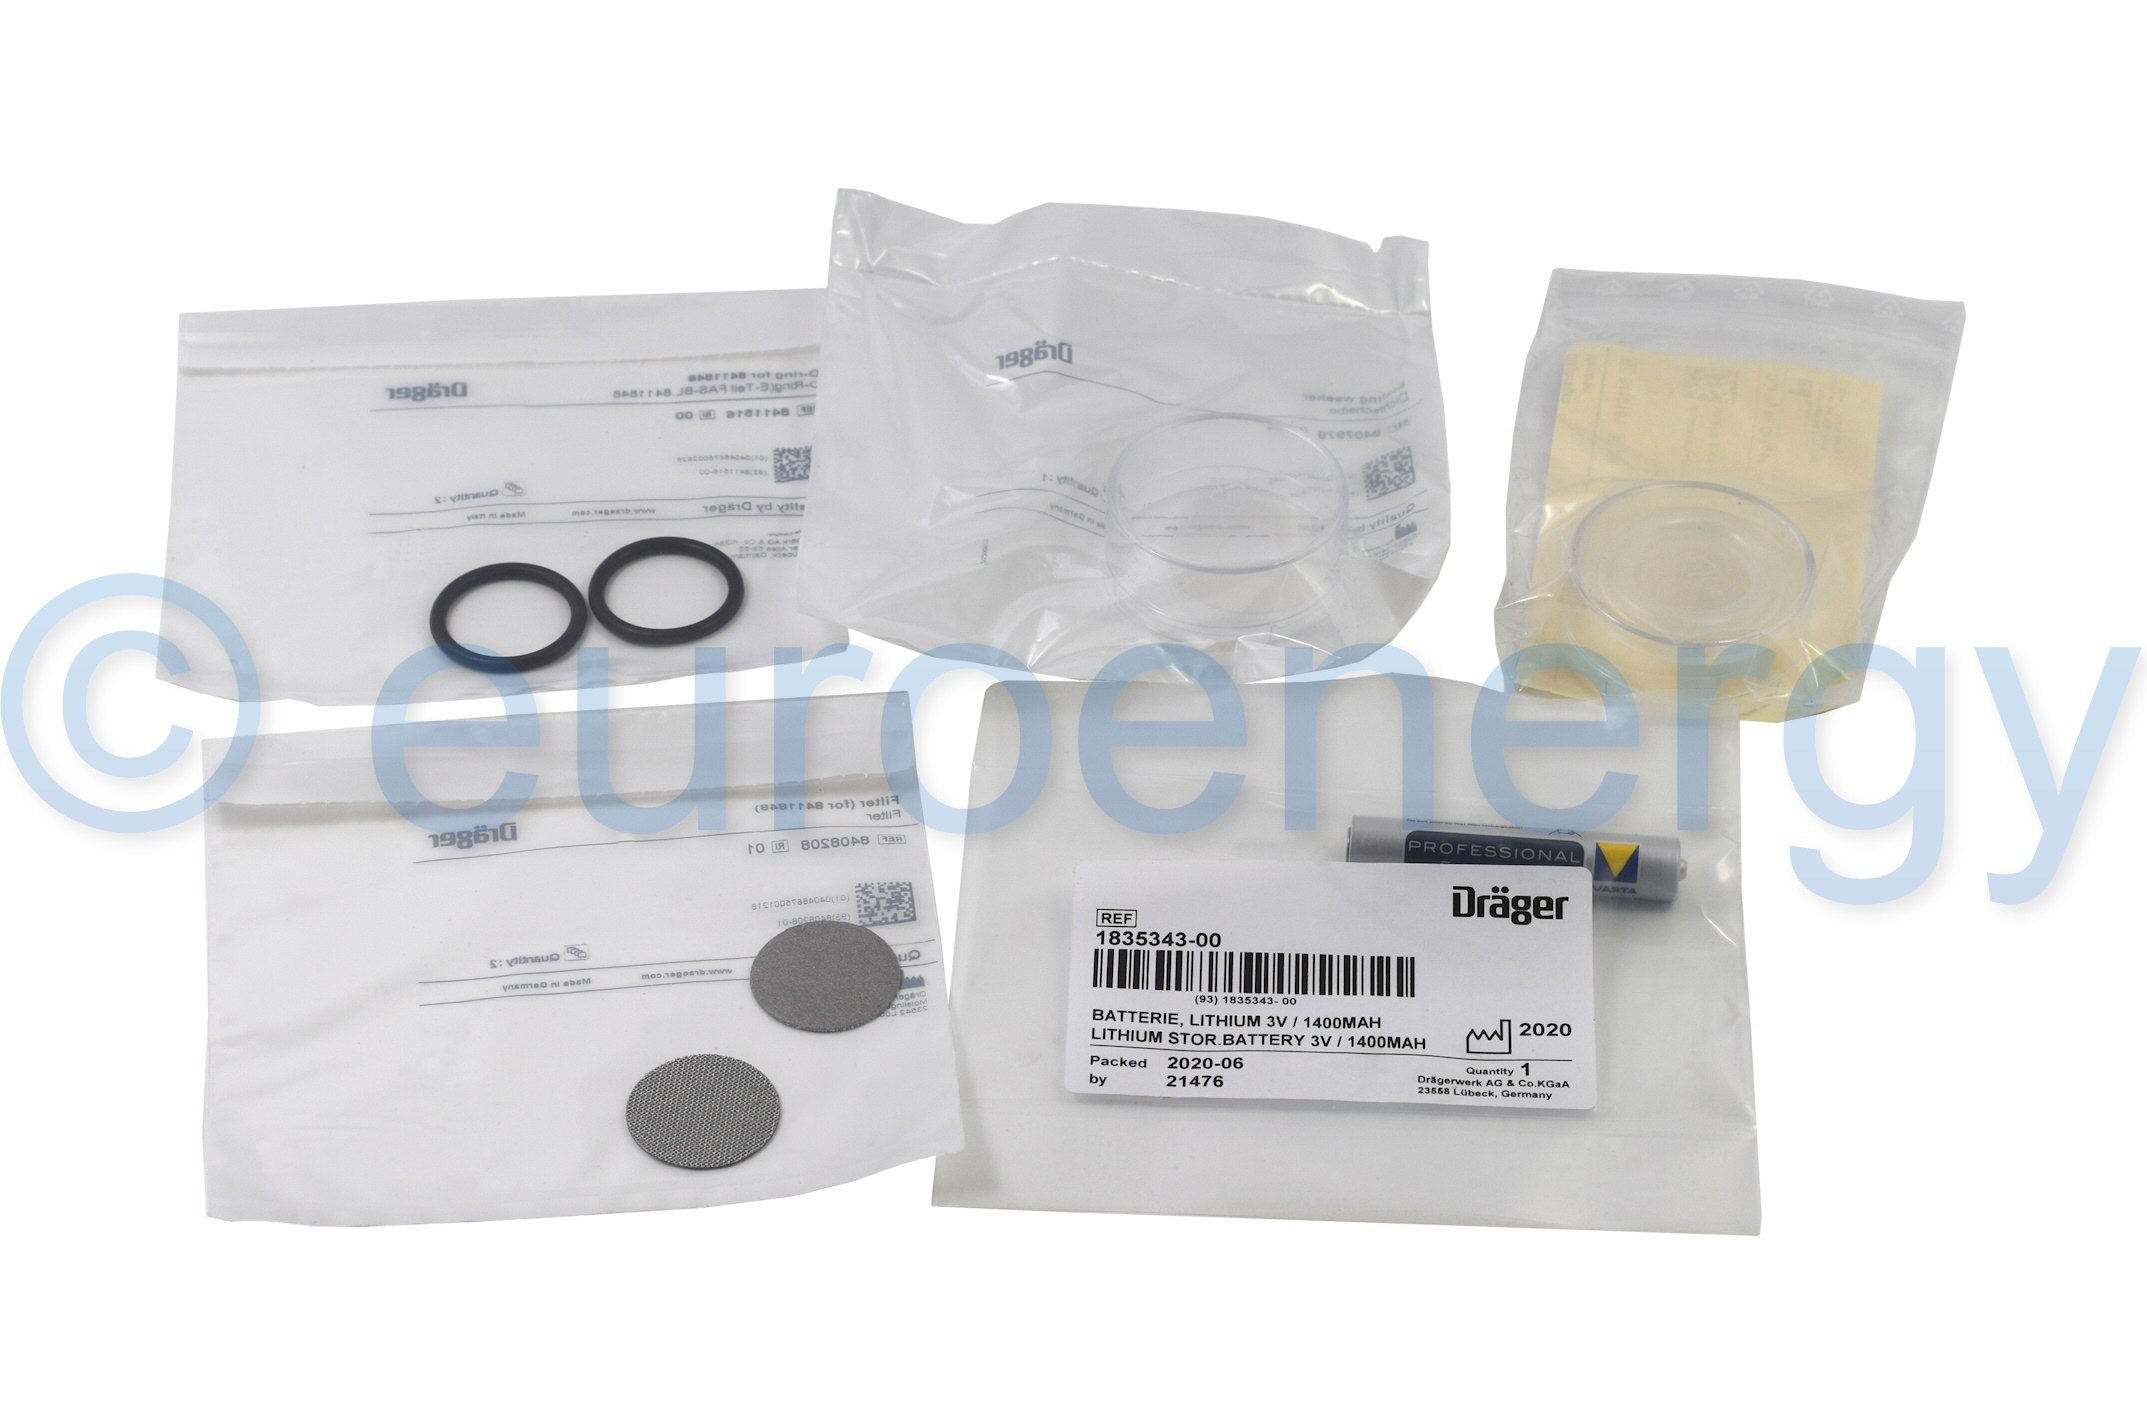 Draeger Evita XL Ventilator Adult 2 Year PM Kit MX08225A Original Medical Accessory